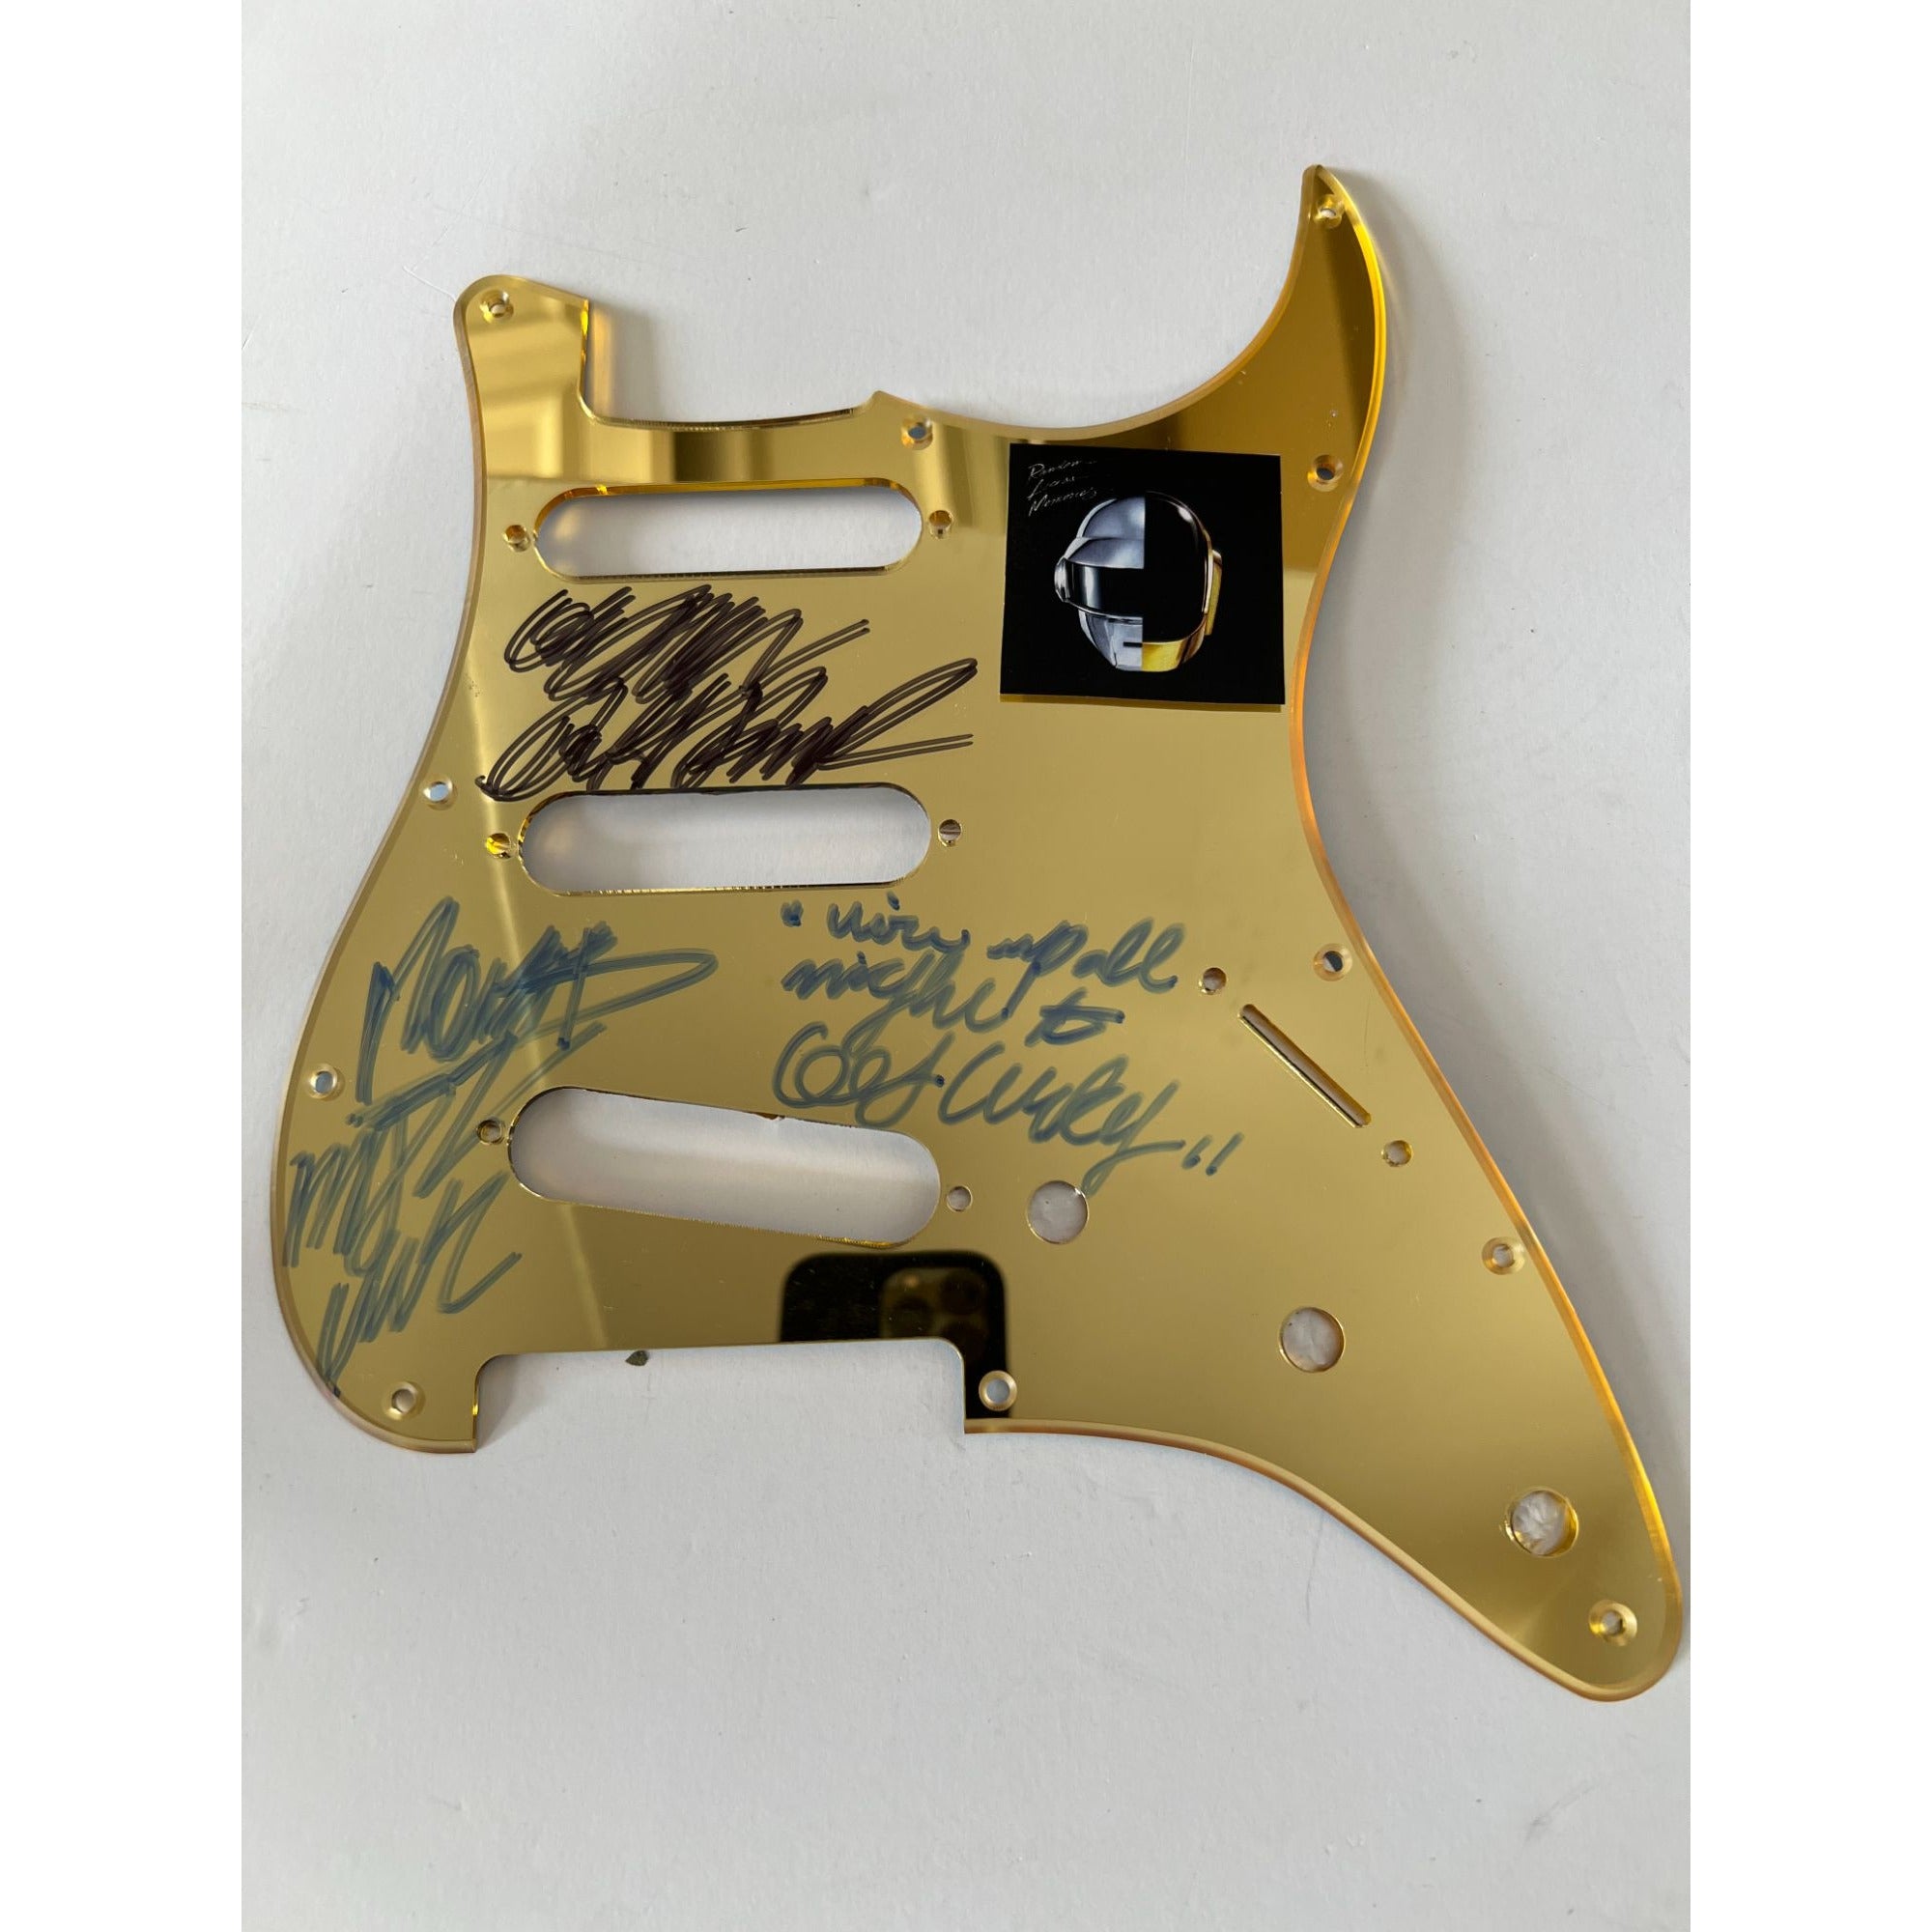 Daft Punk Thomas Bangalter and Guy-Manuel de Homem-Christo of 'Daft Punk' electric guitar pickguard signed with proof